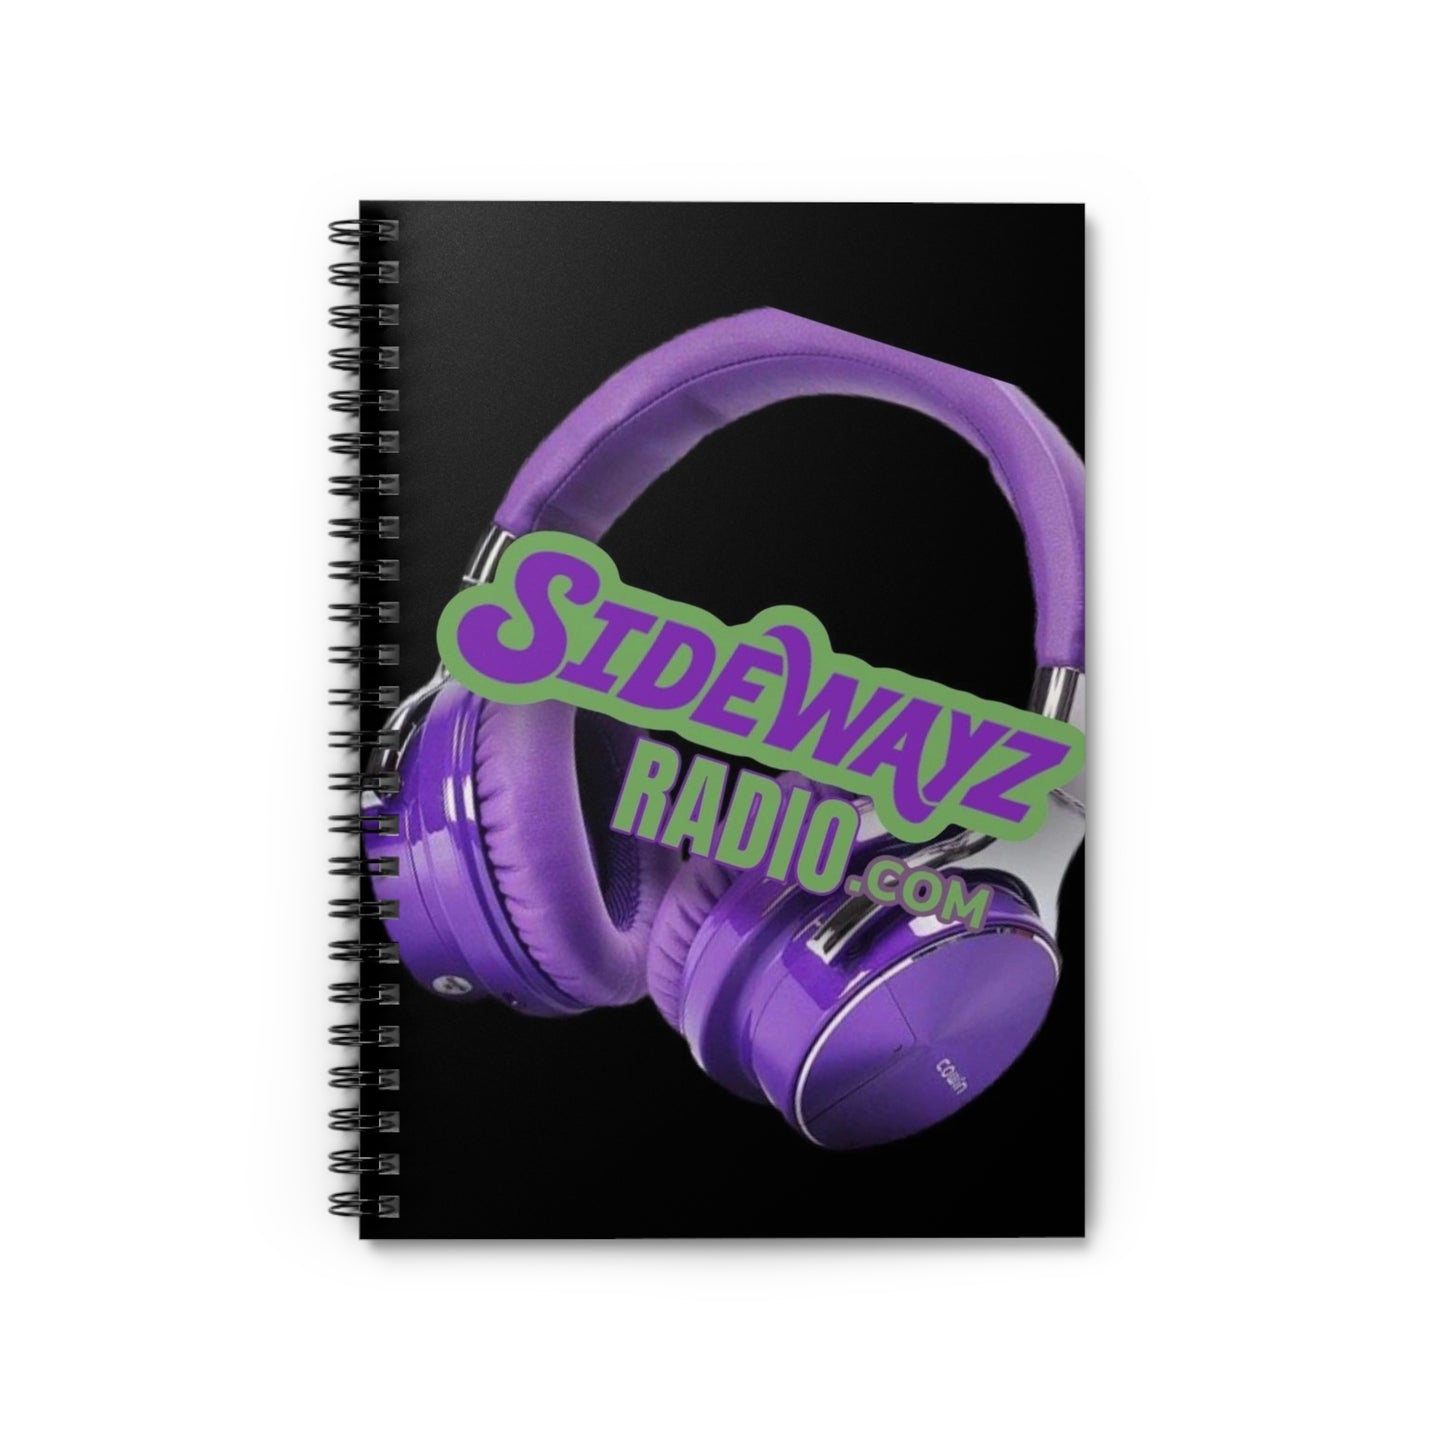 SidewayzRadio.com Spiral Notebook - Ruled Line